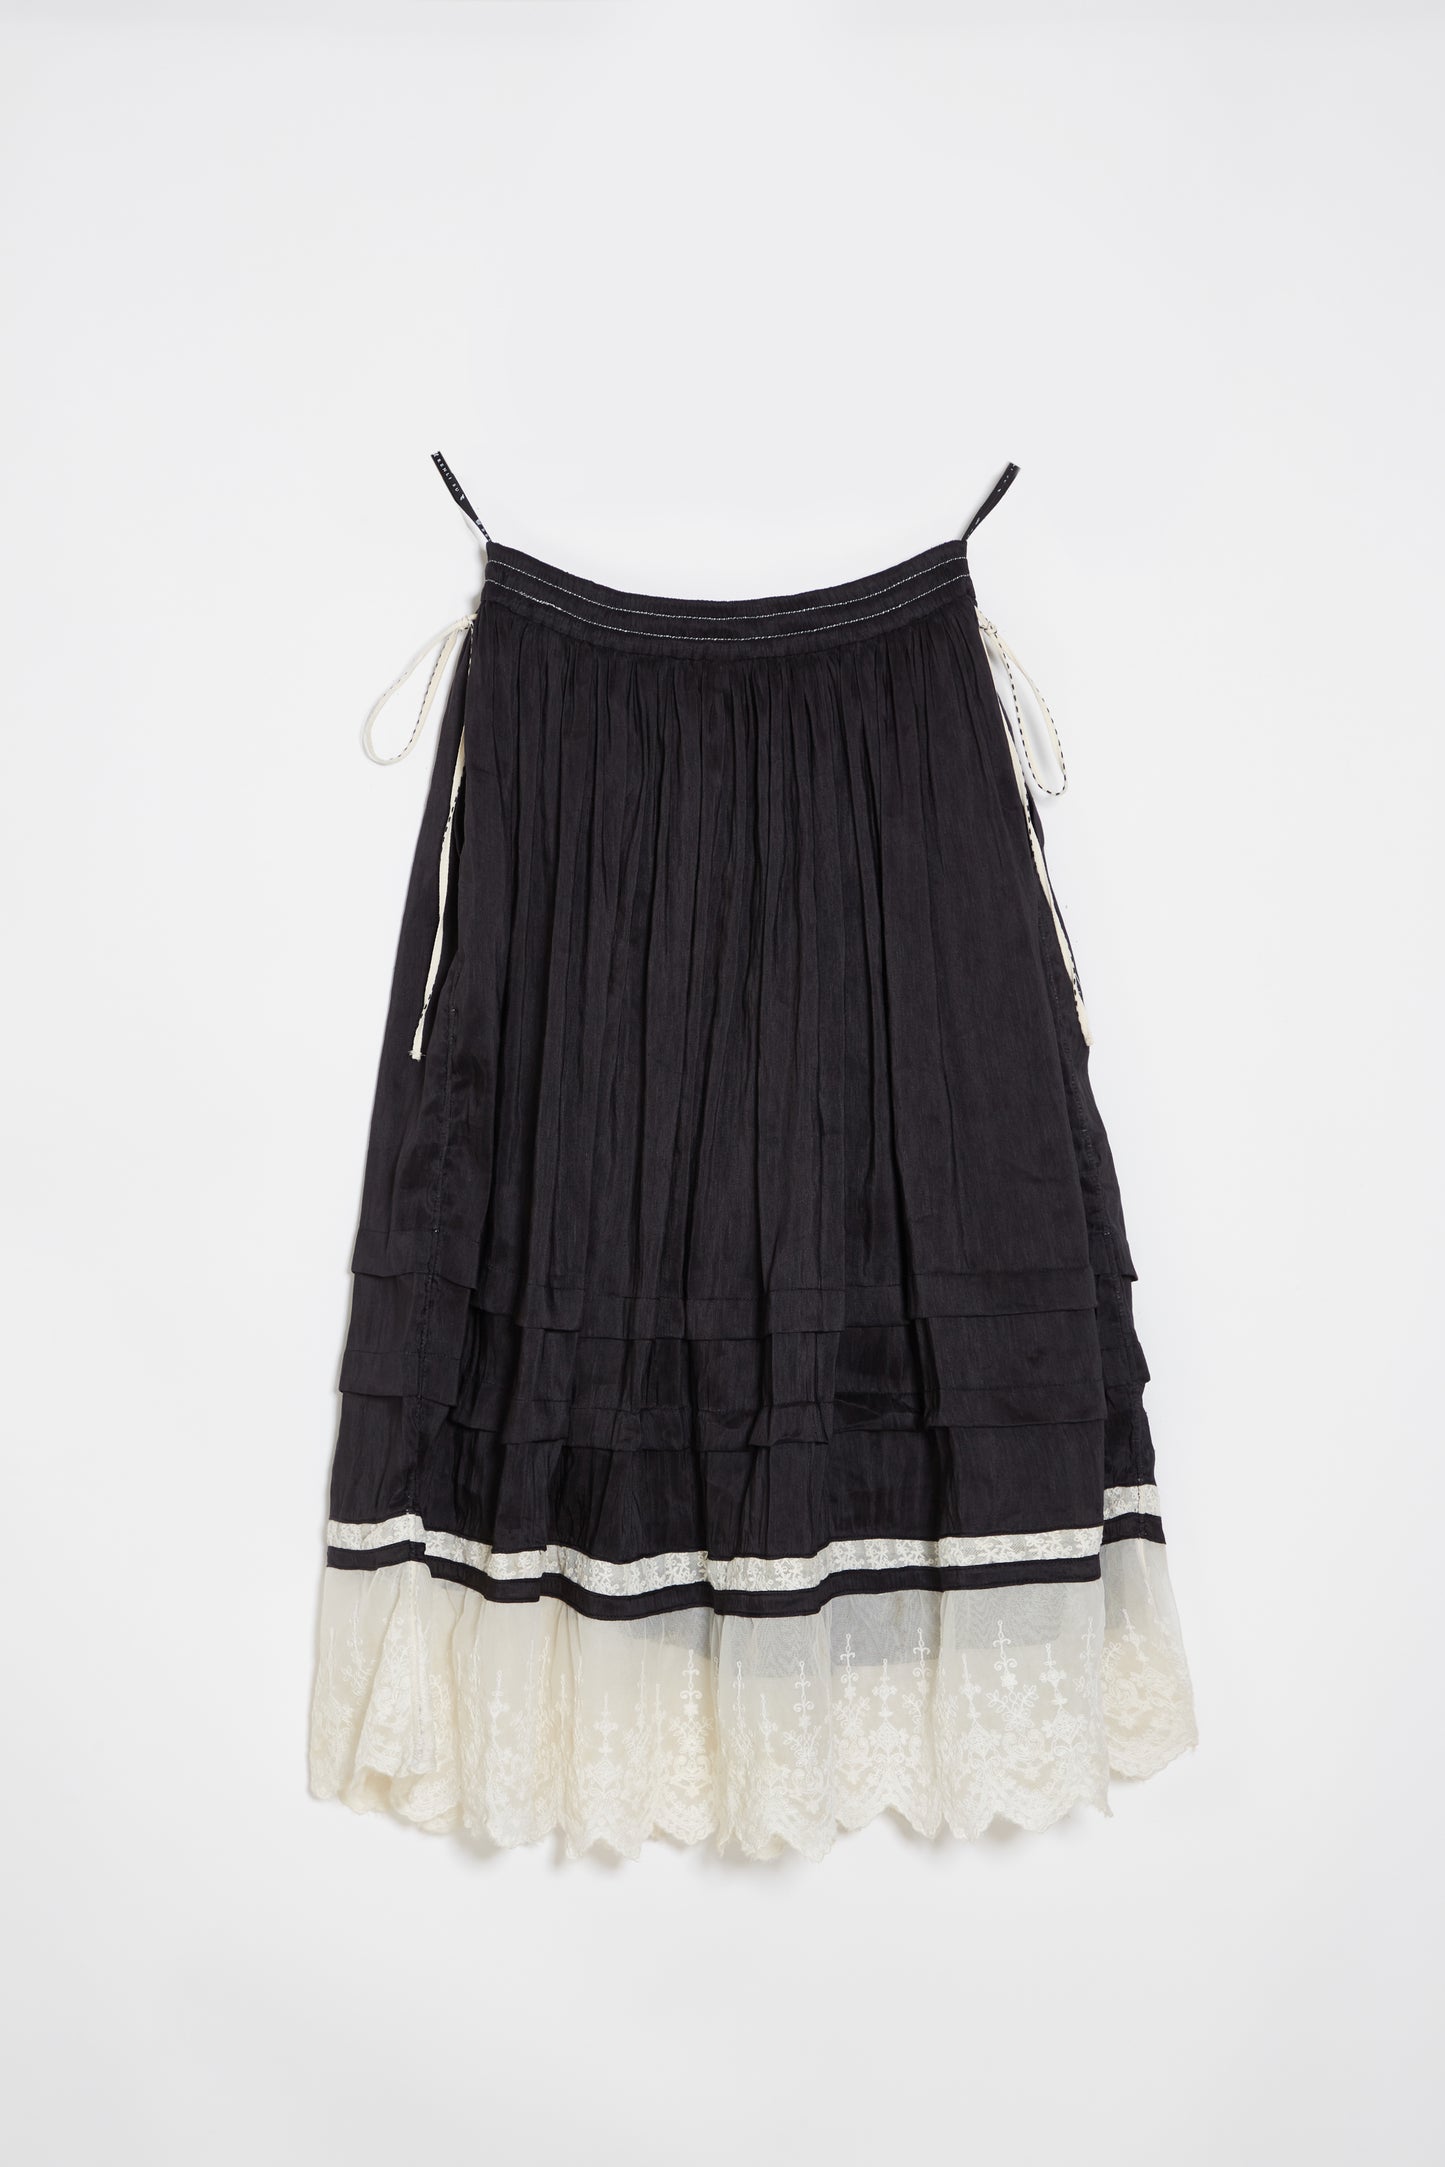 Rowena Skirt